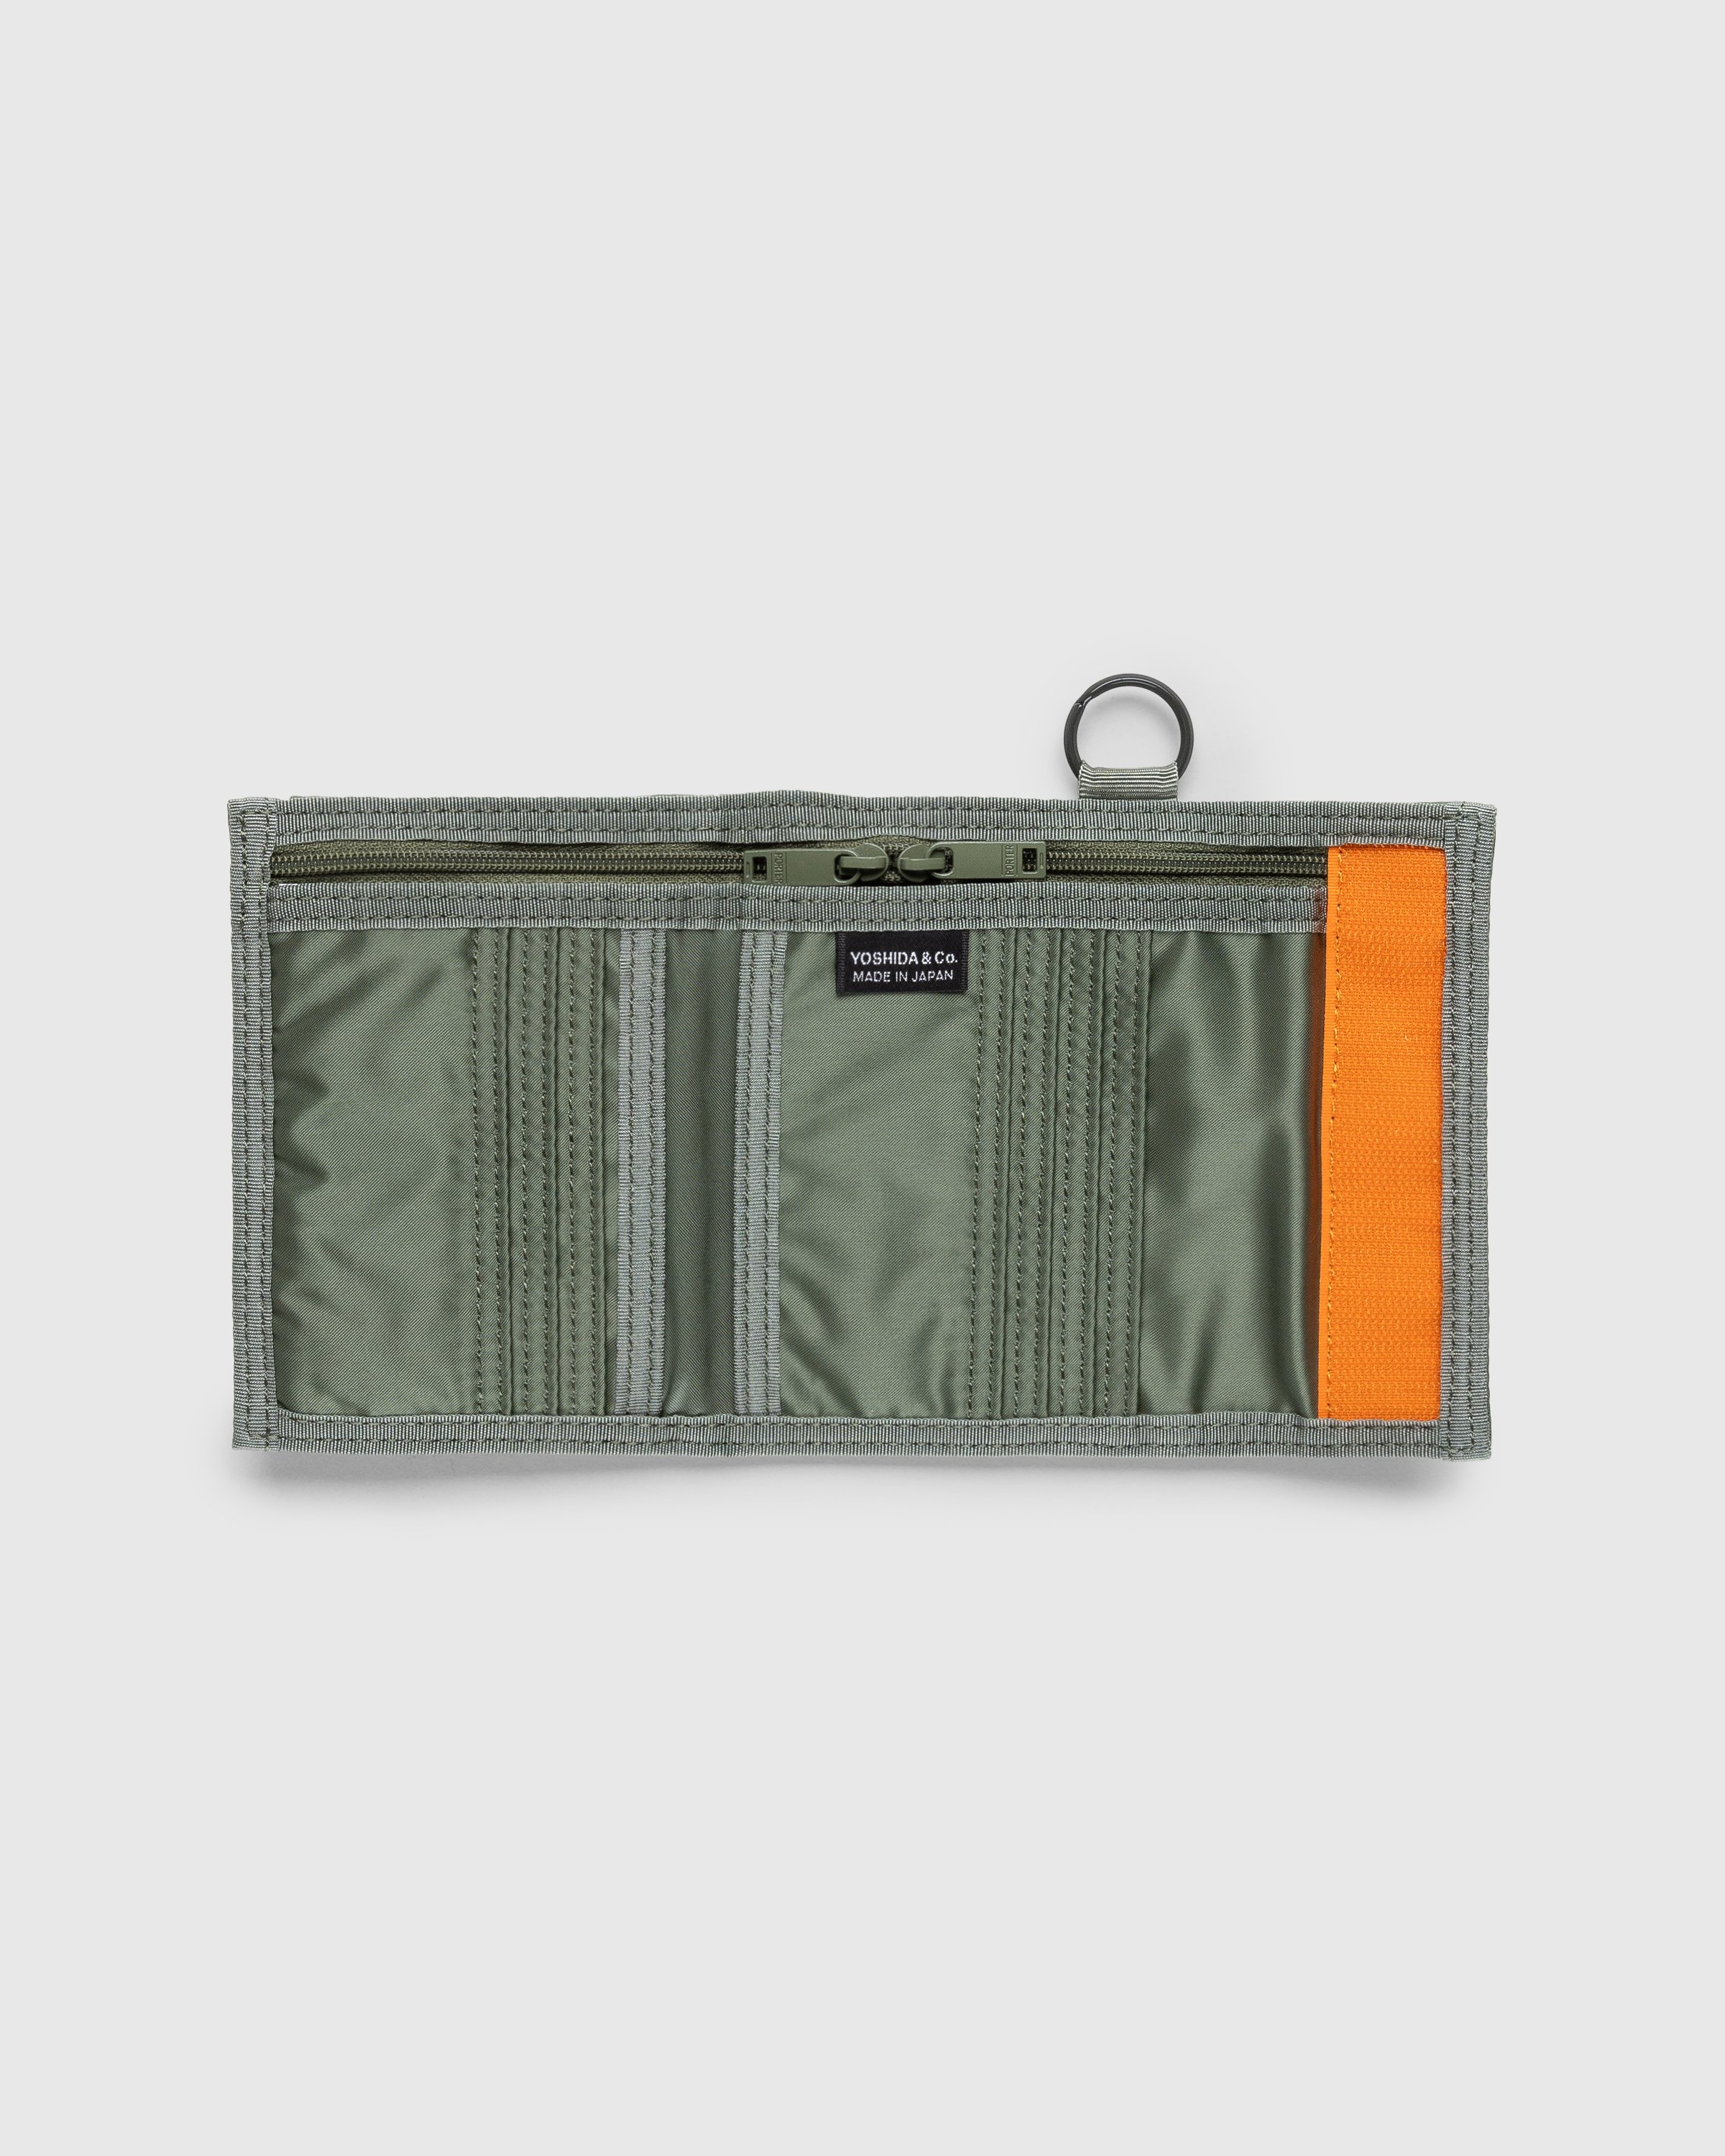 Porter-Yoshida & Co. - Tanker Wallet Green - Accessories - Green - Image 3